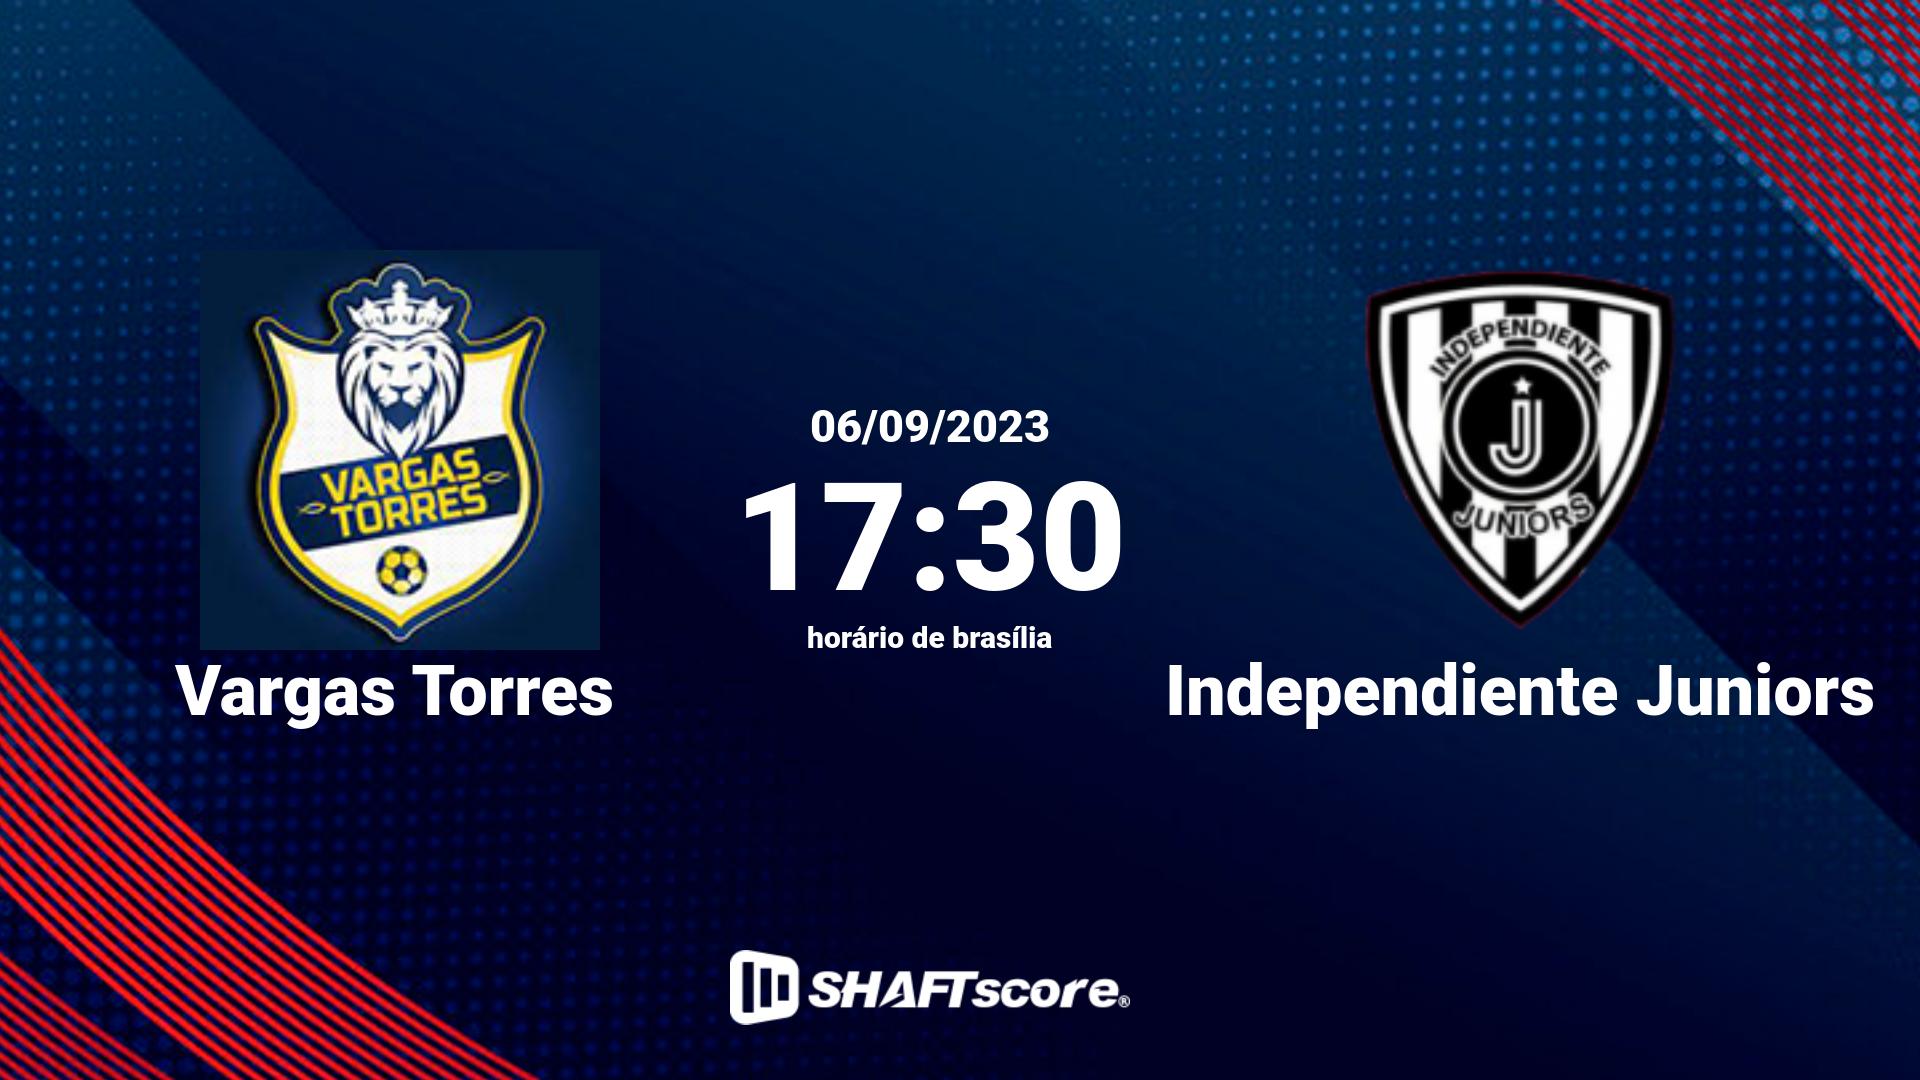 Estatísticas do jogo Vargas Torres vs Independiente Juniors 06.09 17:30